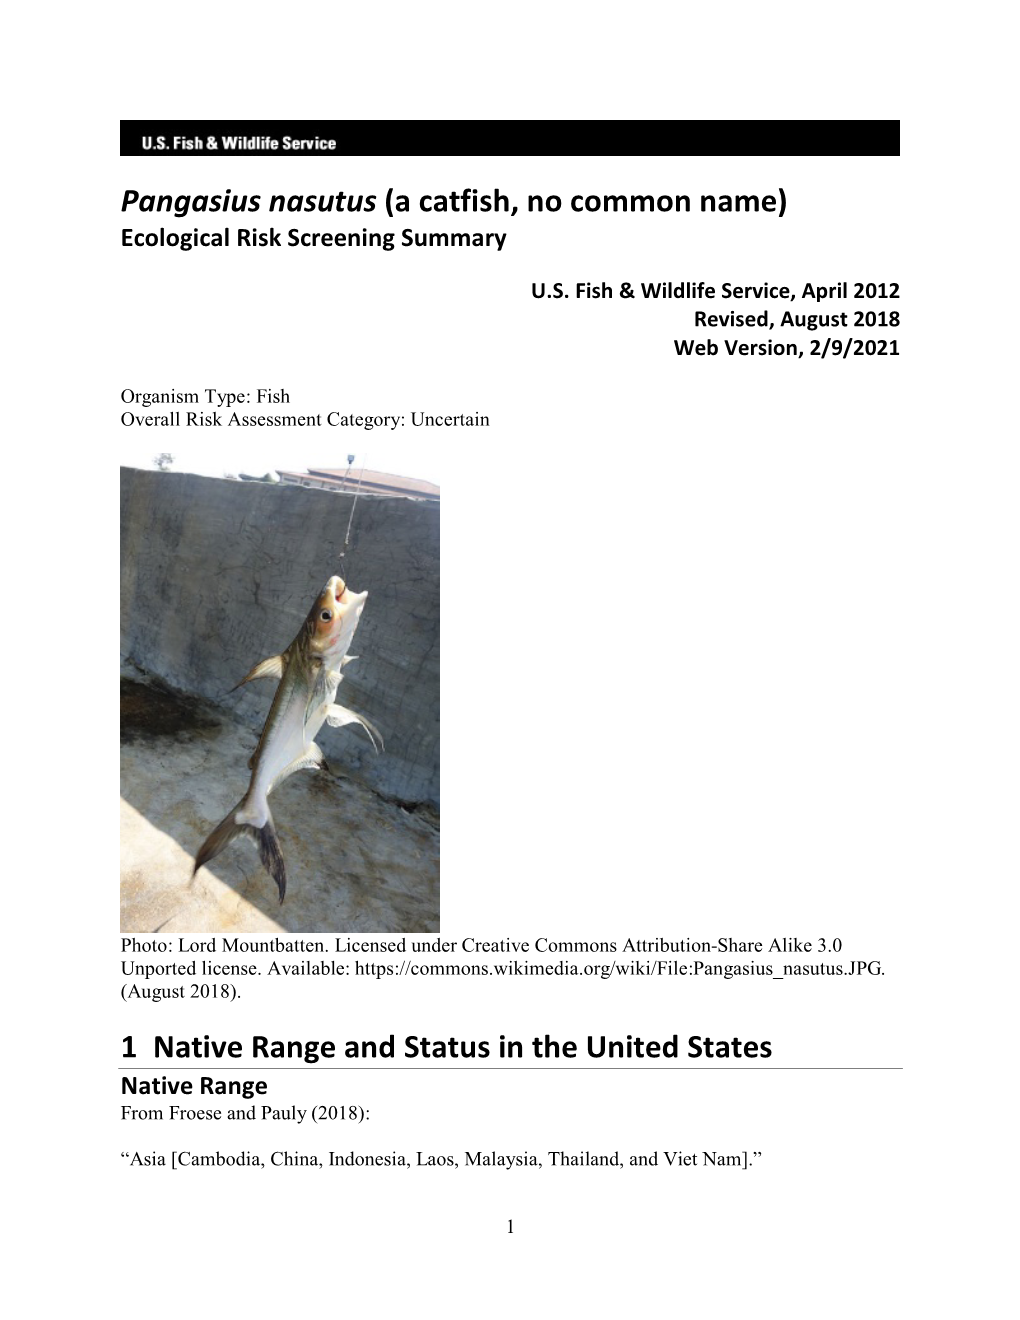 Pangasius Nasutus (A Catfish, No Common Name) Ecological Risk Screening Summary